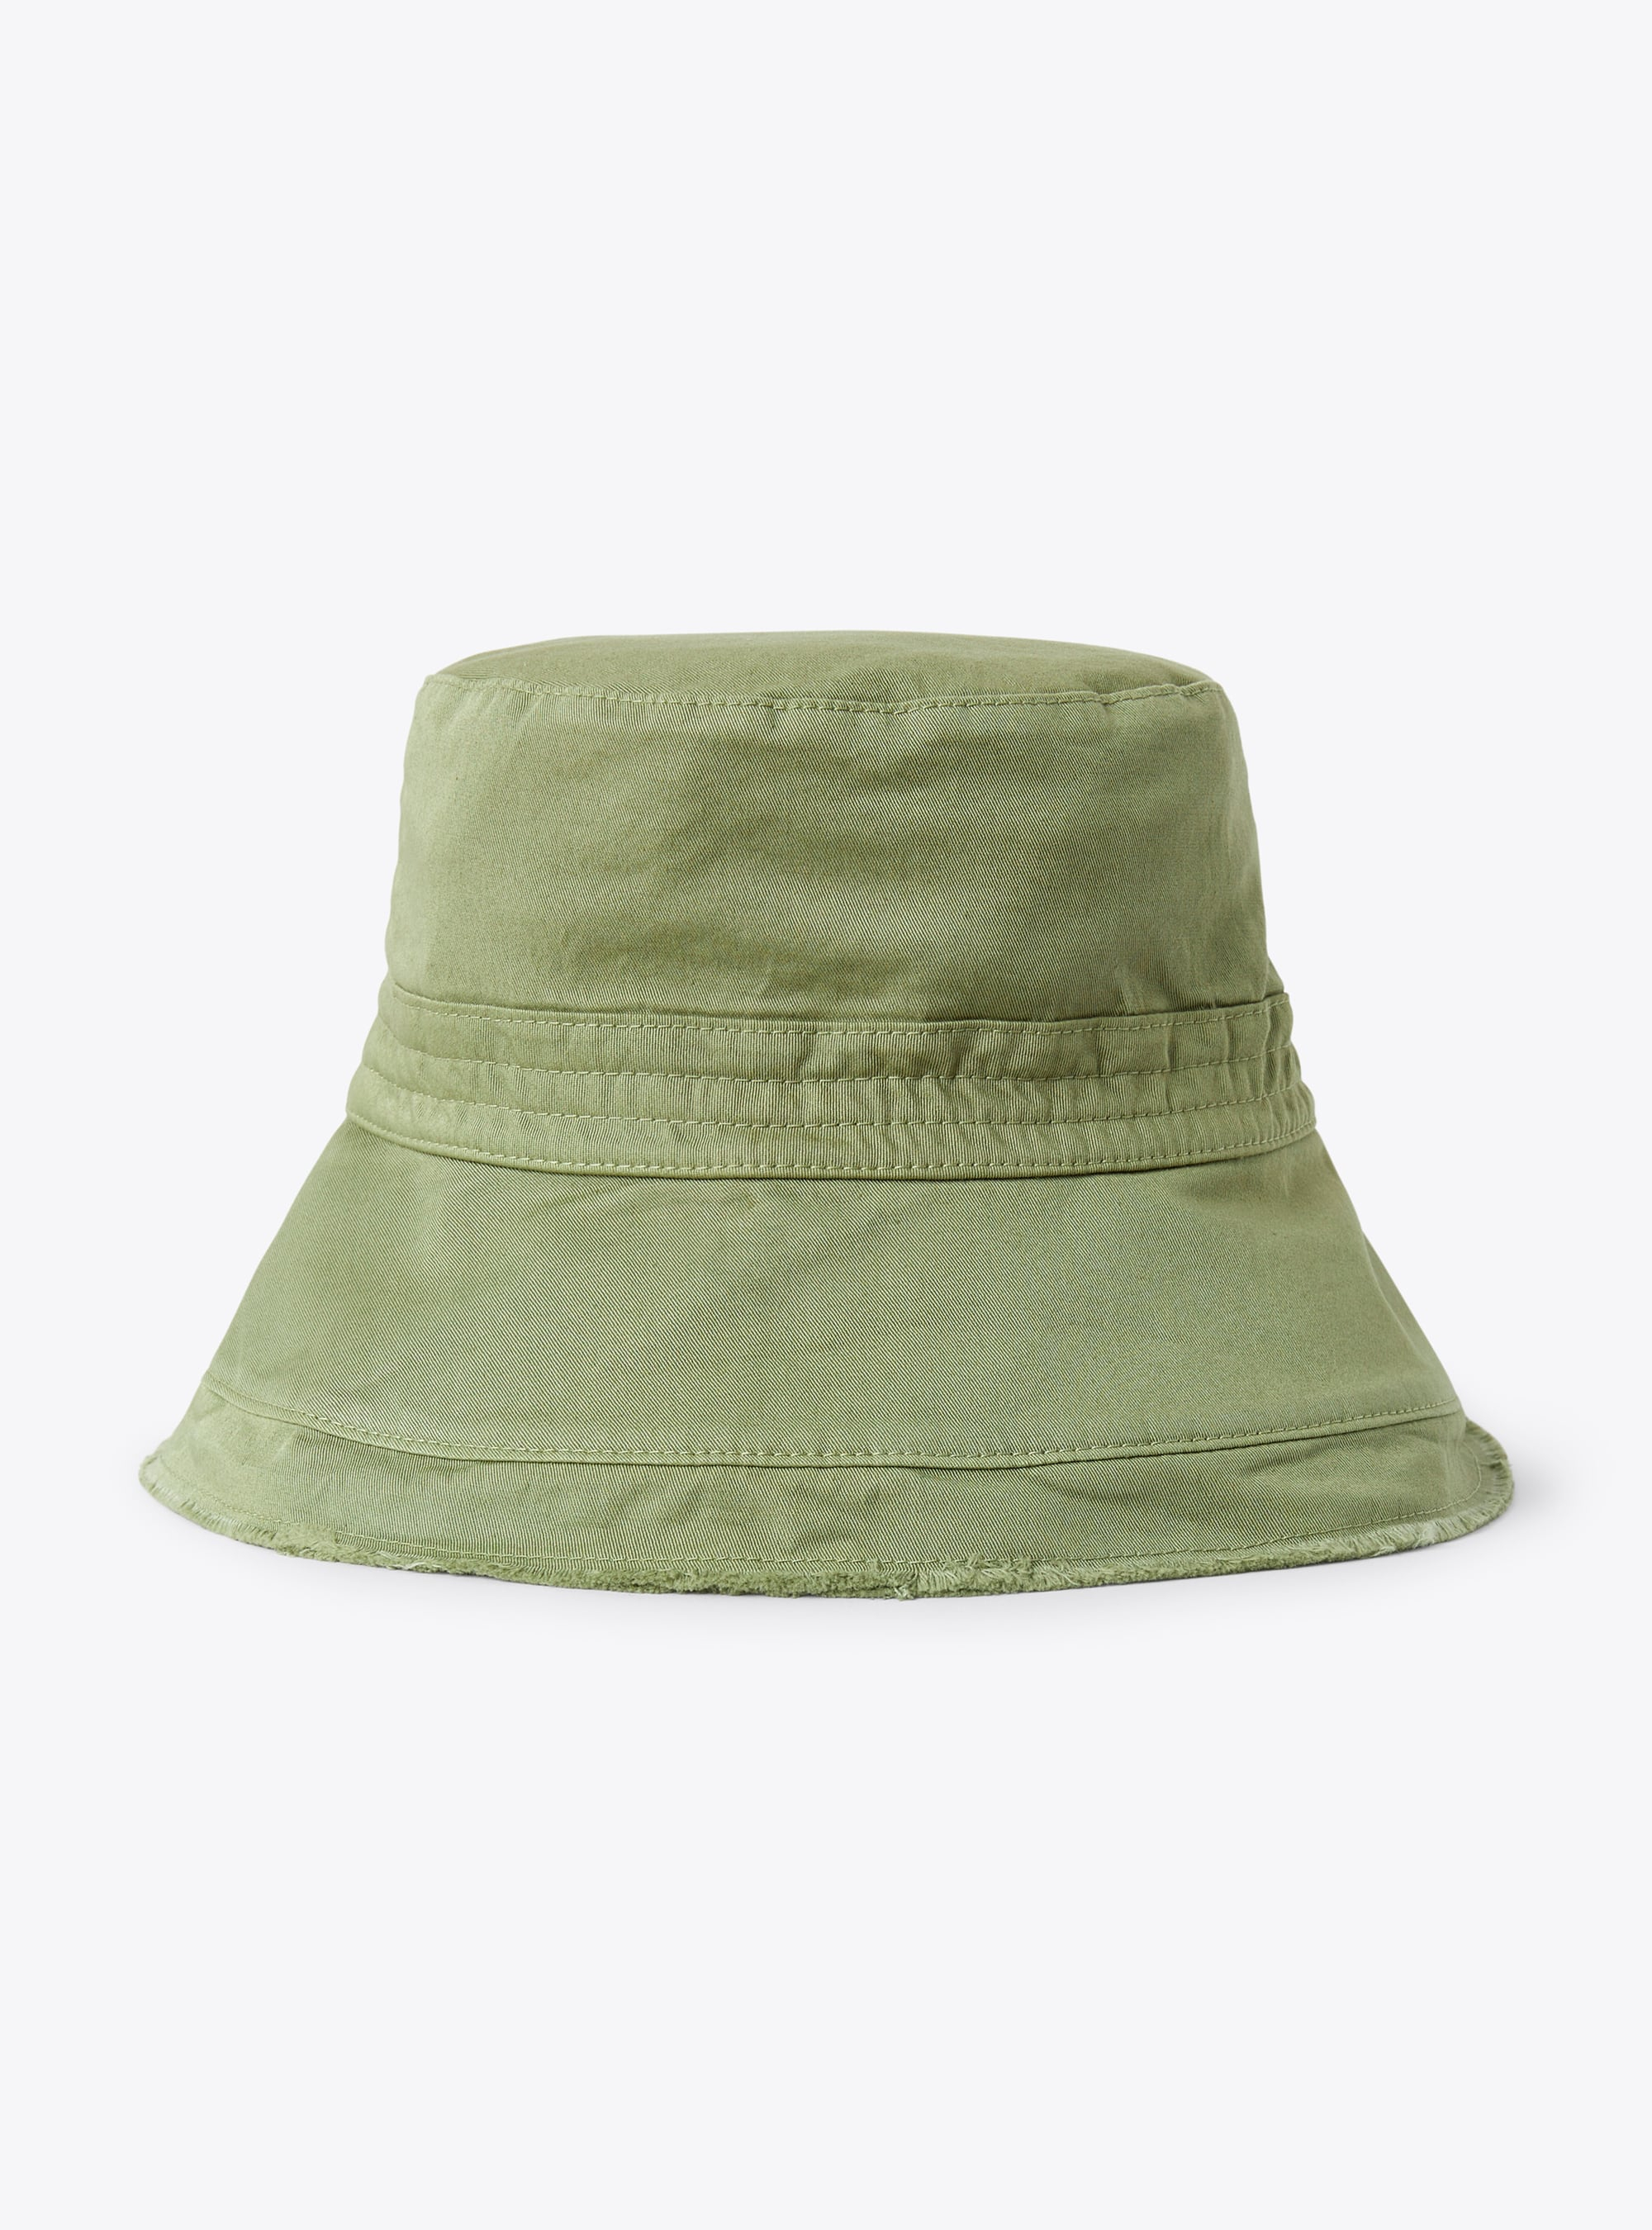 Fisherman’s hat in sage-green gabardine - Green | Il Gufo